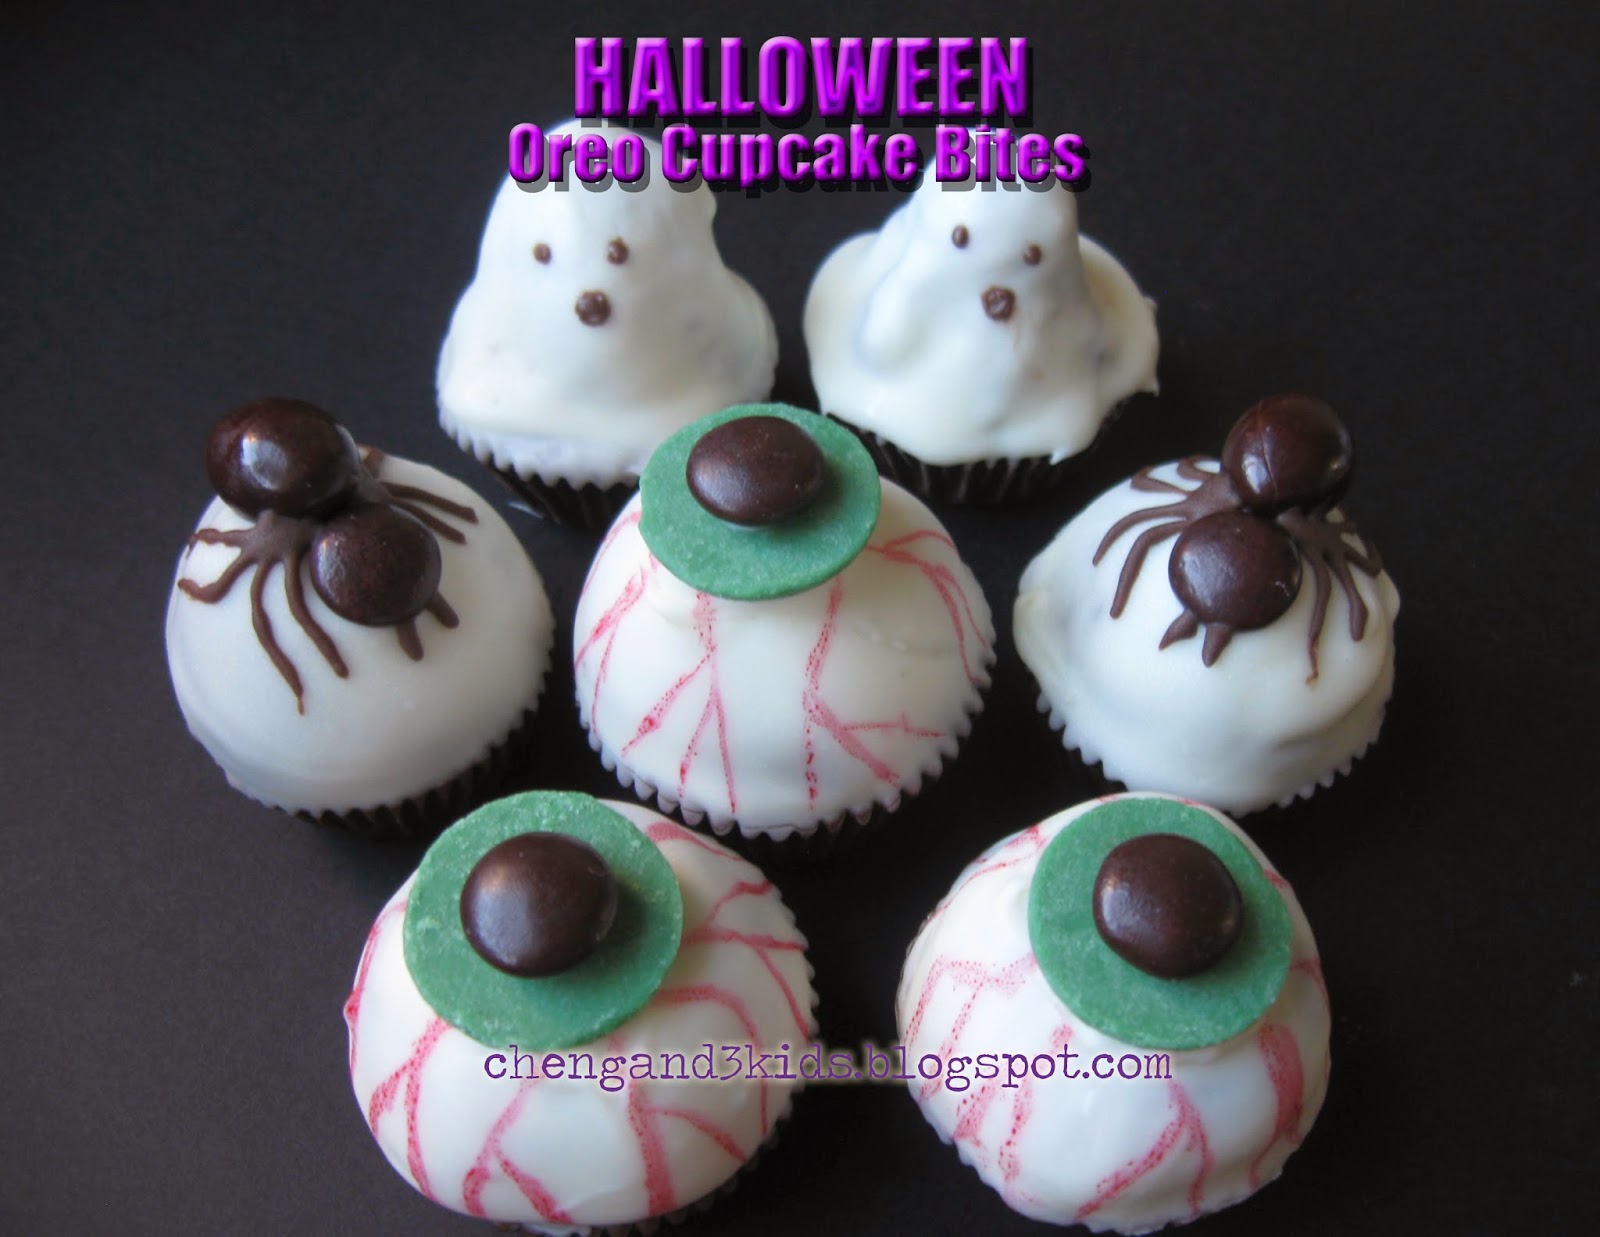 cupcakes halloween  these halloween oreo cupcake bites with you i call them oreo cupcake